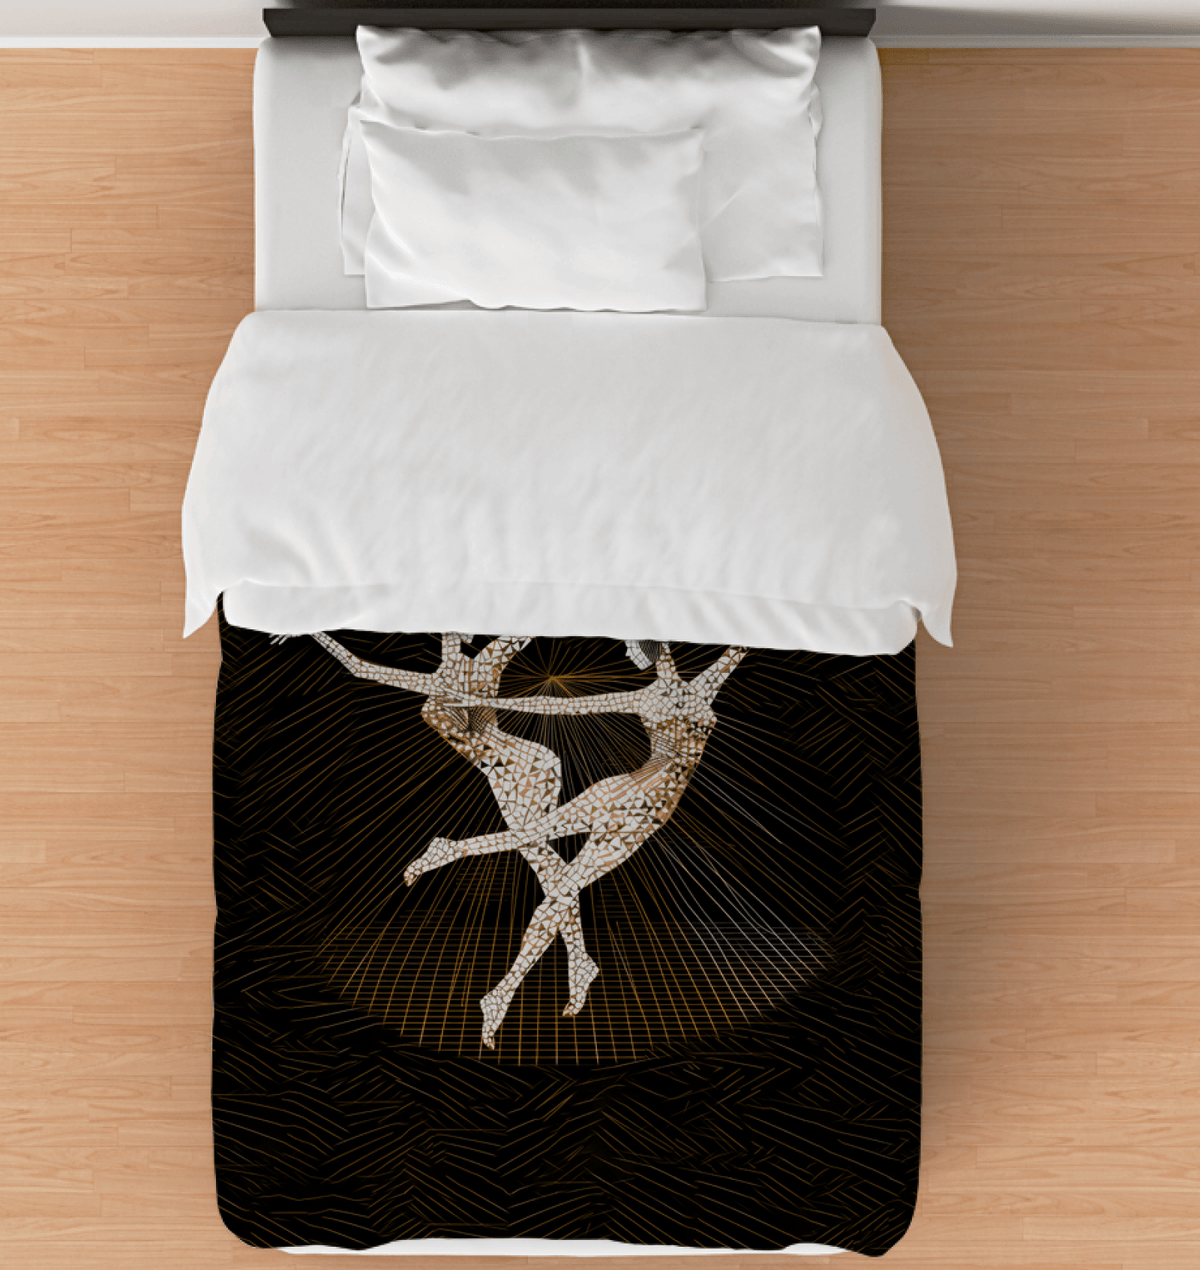 Elegant Twin Comforter with Feminine Dance Motion Design for a Stylish Bedroom